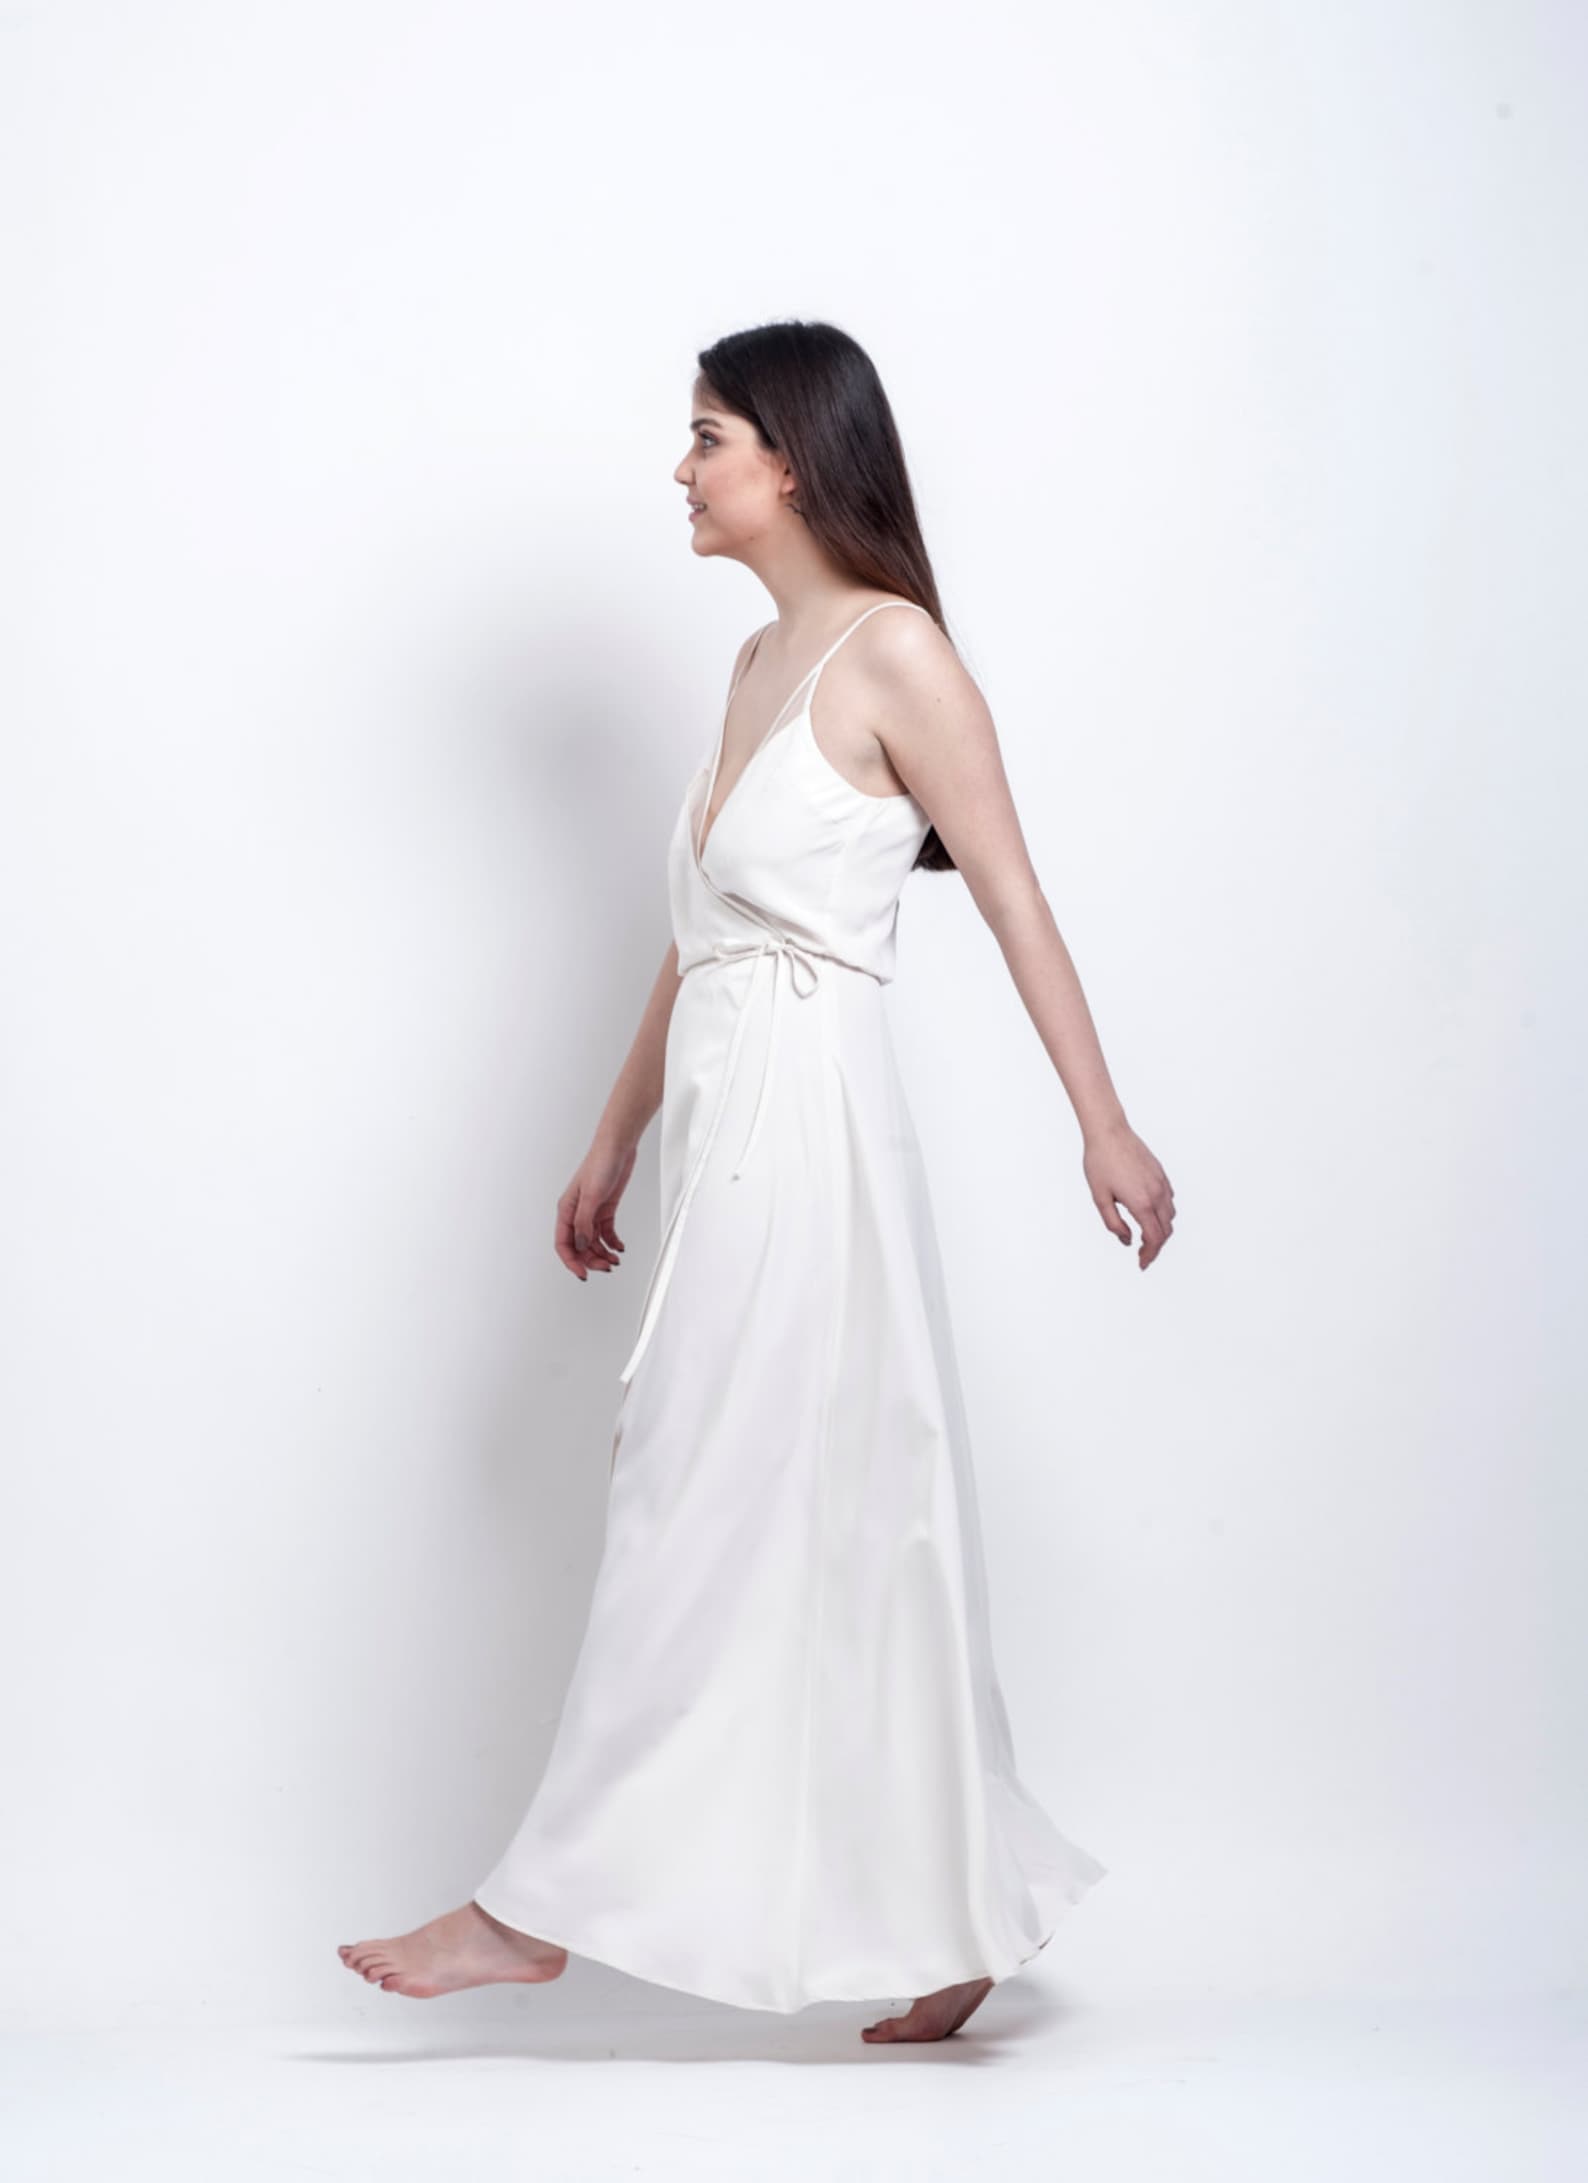 Wedding dress Wrap white maxi dress Bridal maxi dress | Etsy